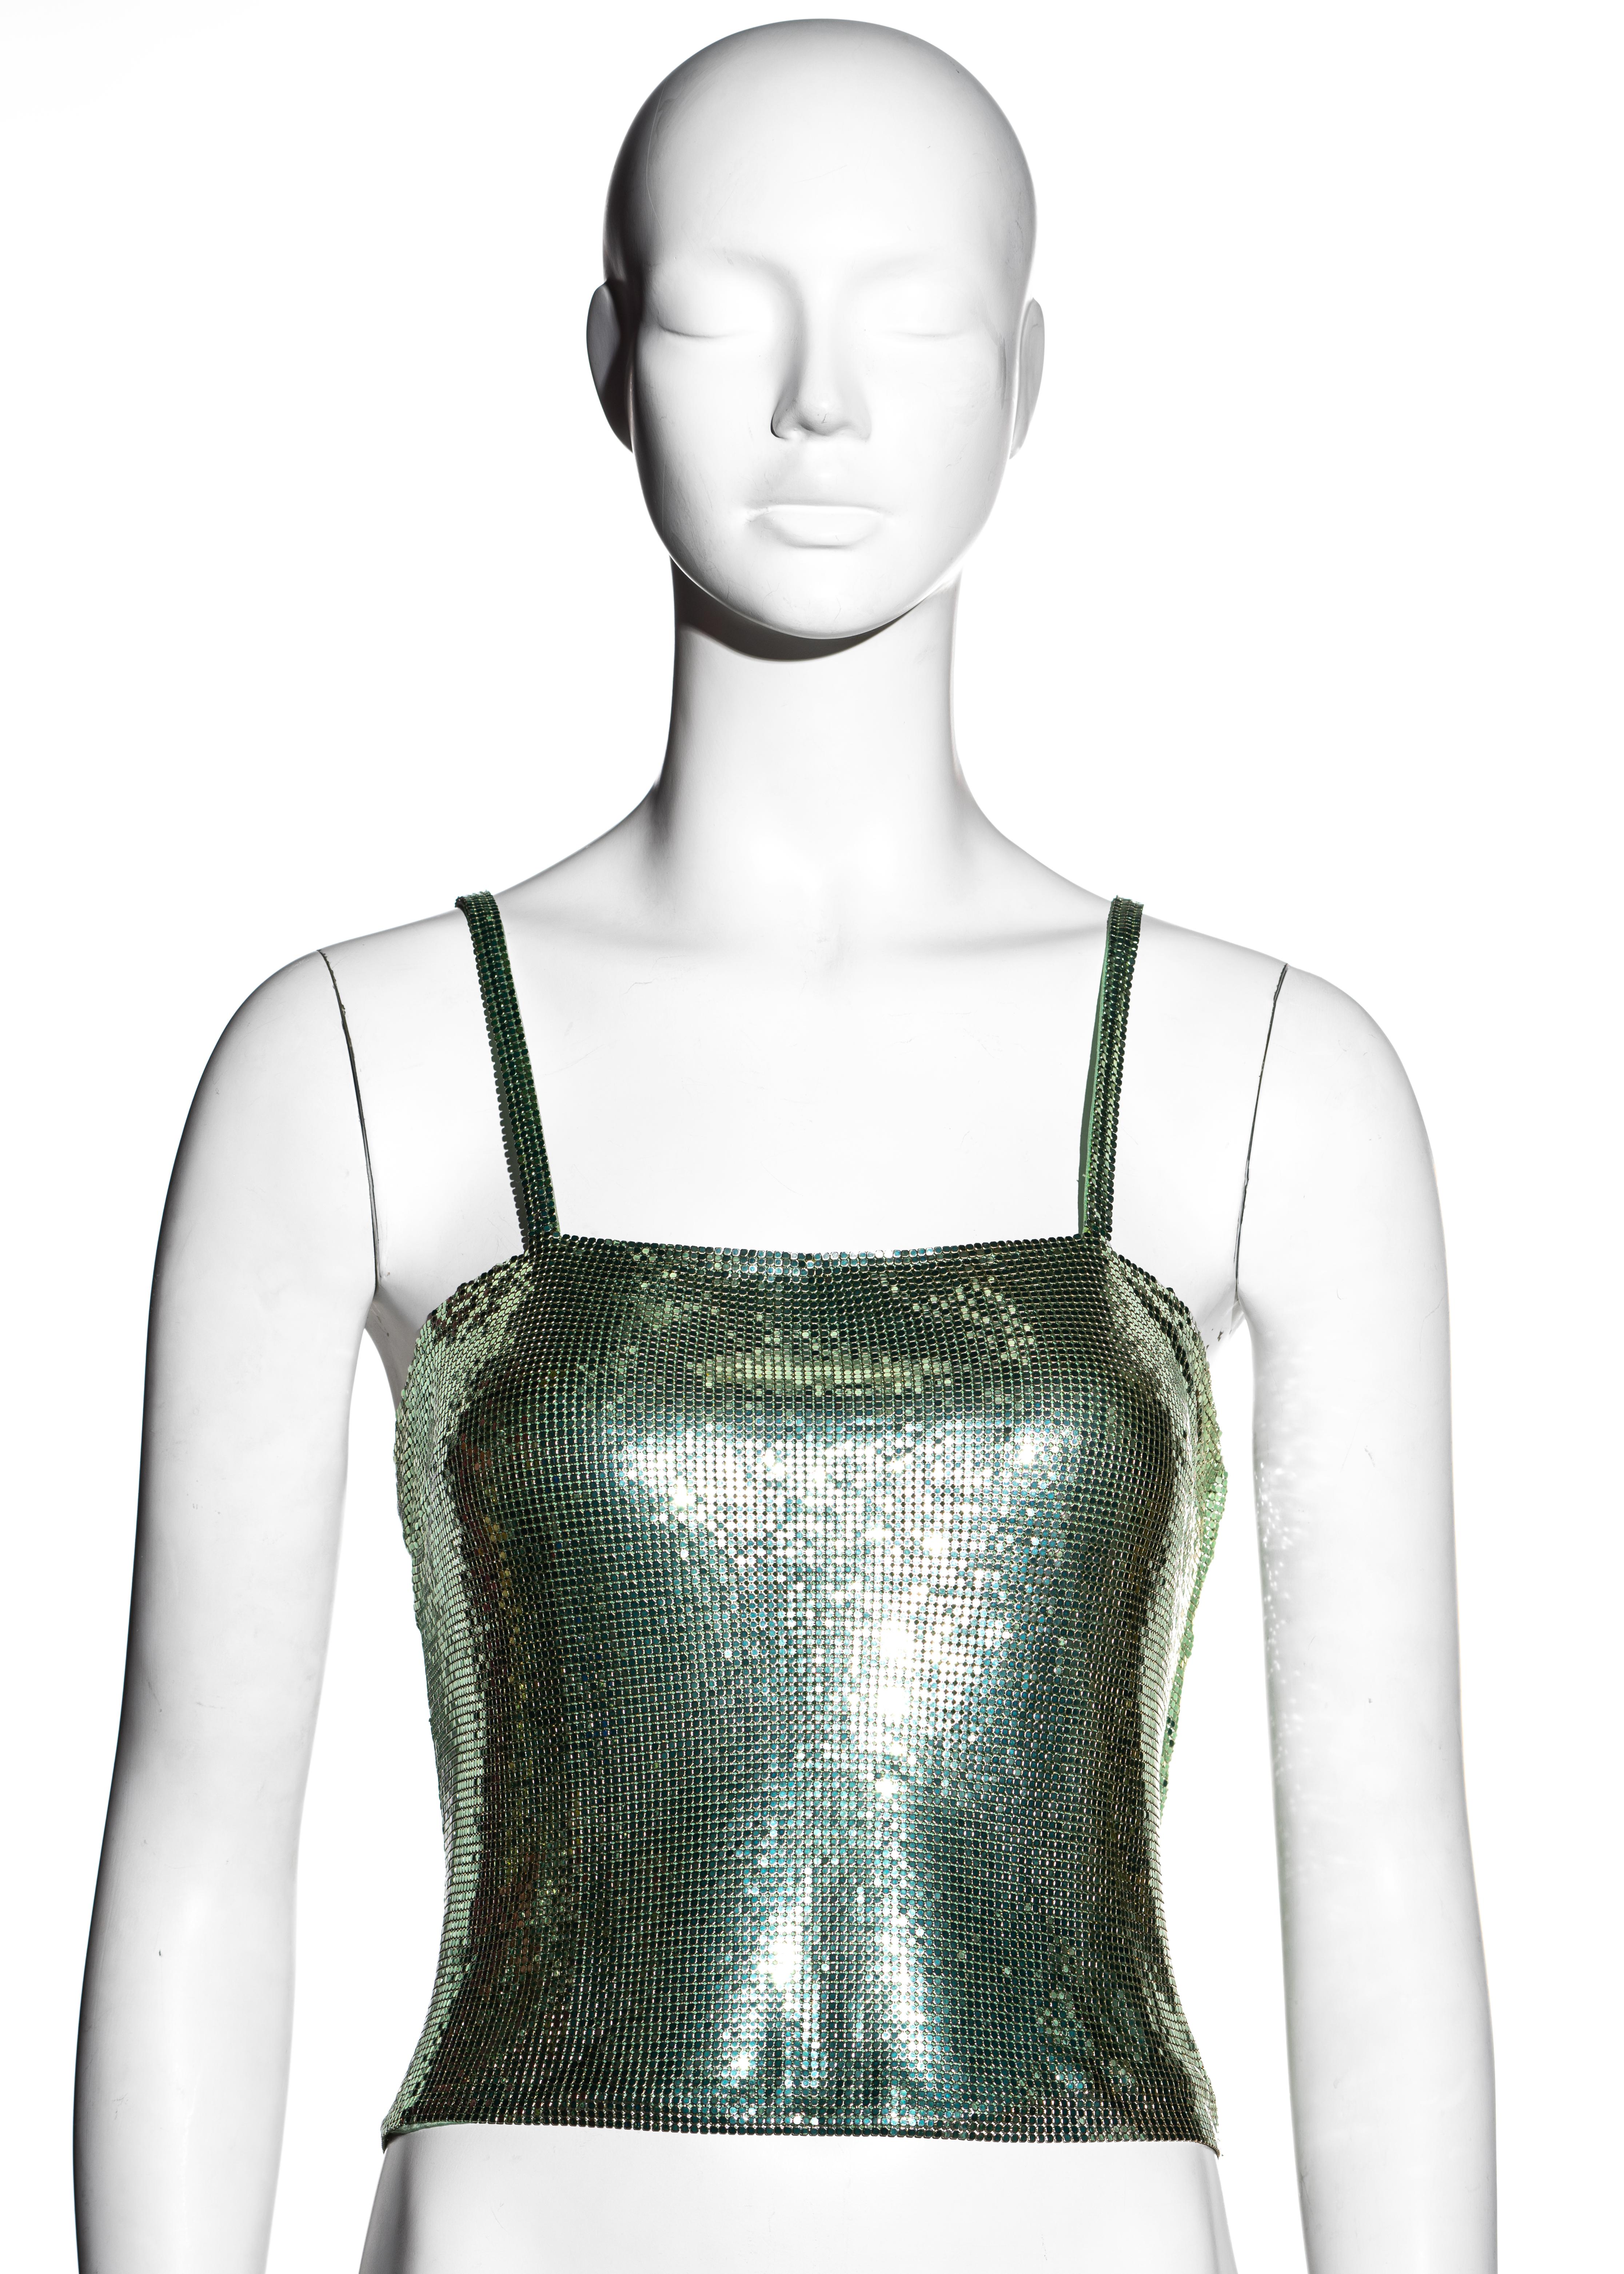 ▪ Gianni Versace green Oroton metal chainmail evening vest
▪ 100% Aluminium, 100% Silk
▪ Spaghetti straps 
▪ Zip fastening at side seam
▪ IT 40 - FR 36 - UK 8 - US 4
▪ Spring-Summer 2003